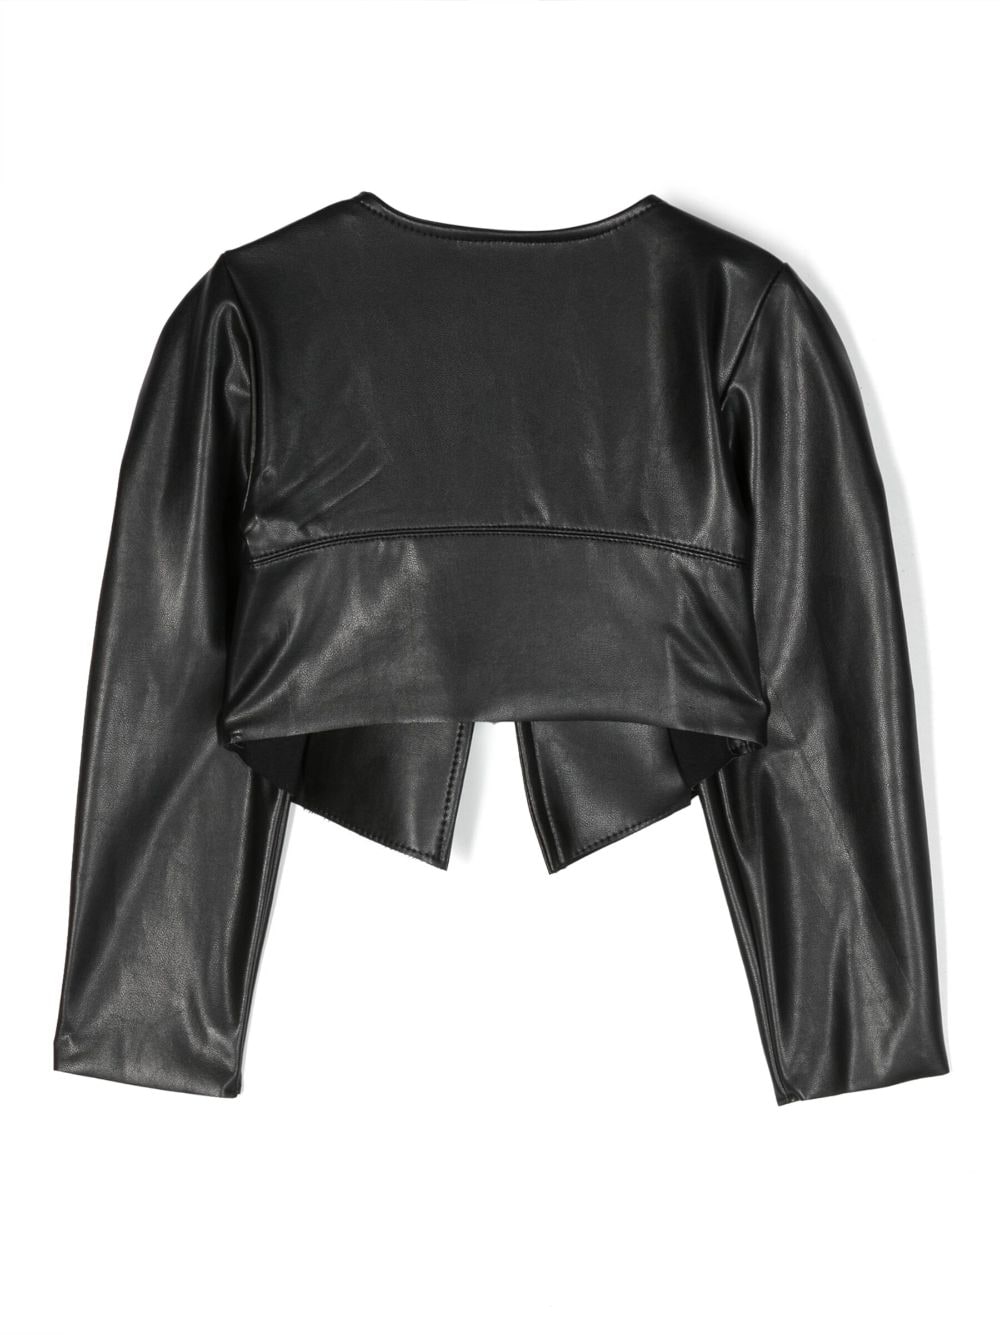 Monnalisa faux leather jacket